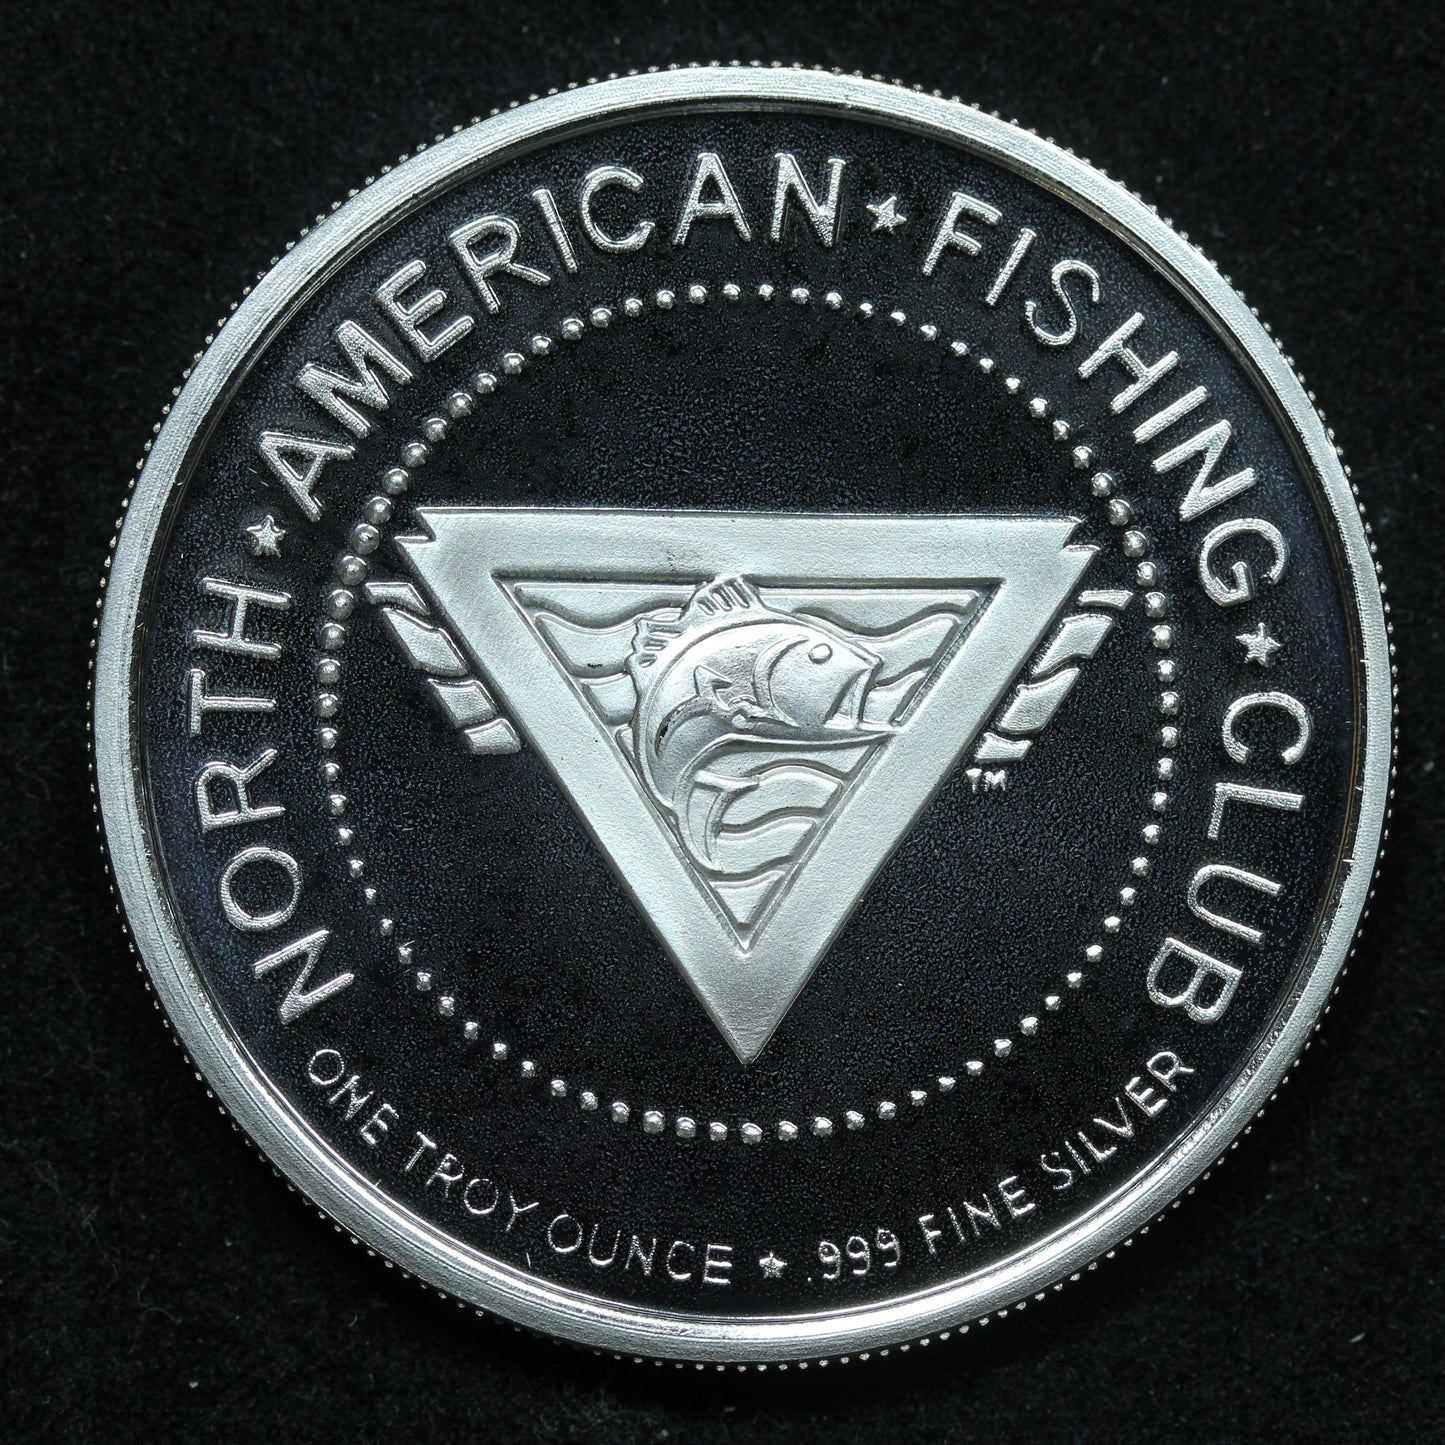 1 oz .999 Fine Silver - National Fishing Grand Slam - Brook Trout w/ Capsule